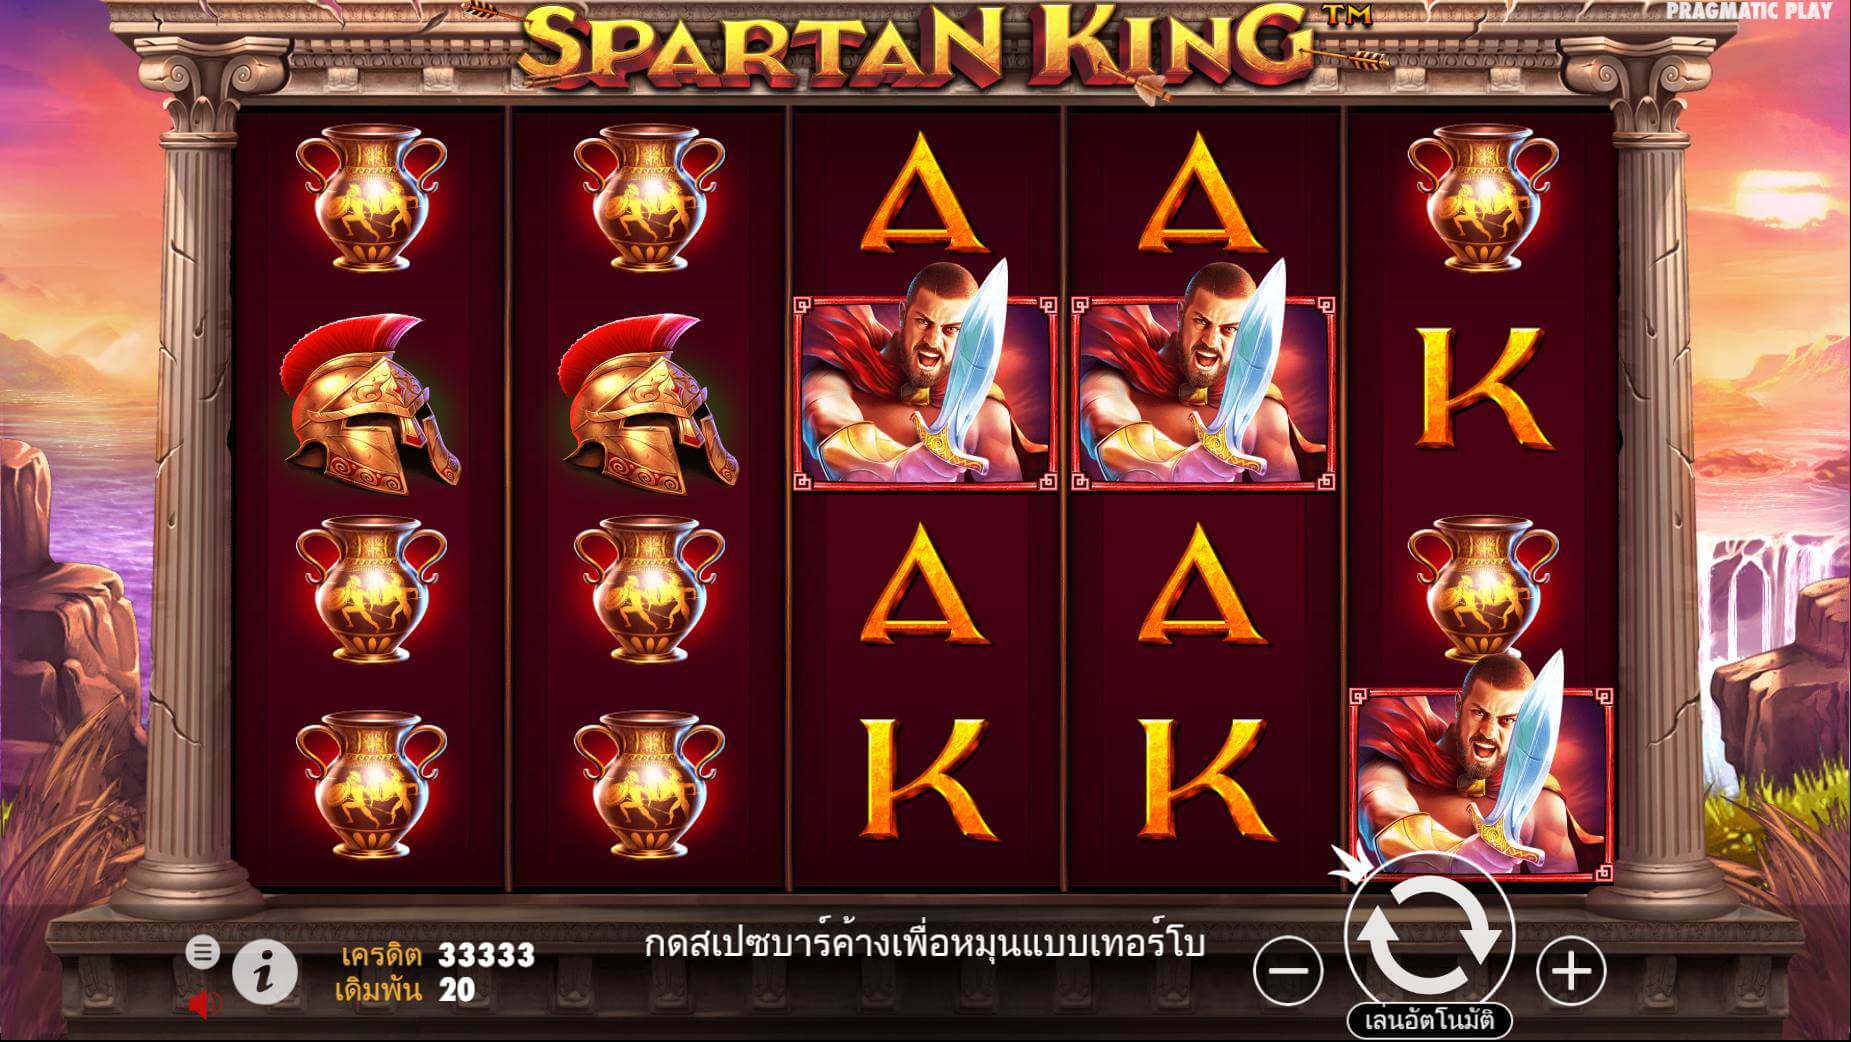 pragmatic play ฟรีเครดิต Spartan King Superslot เครดิตฟรี 300